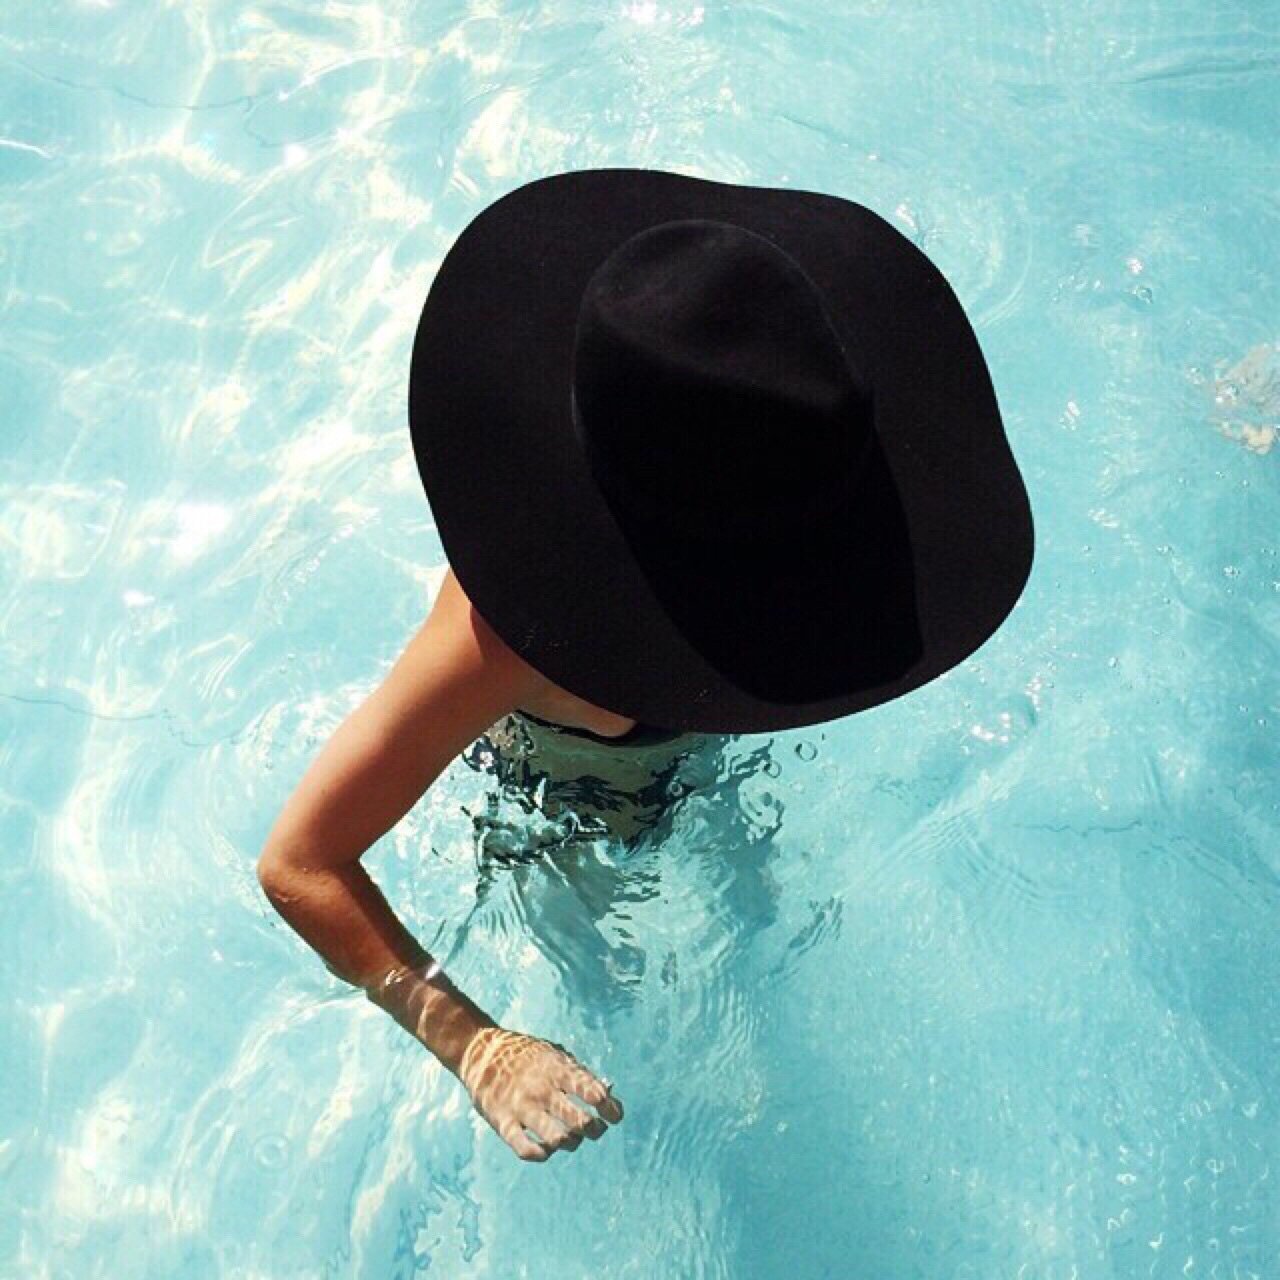 Шляпа на воде. Девушка в шляпе на море. Девушка в шляпе на пляже. Шляпа для пляжа. Девушка в шляпке у моря.